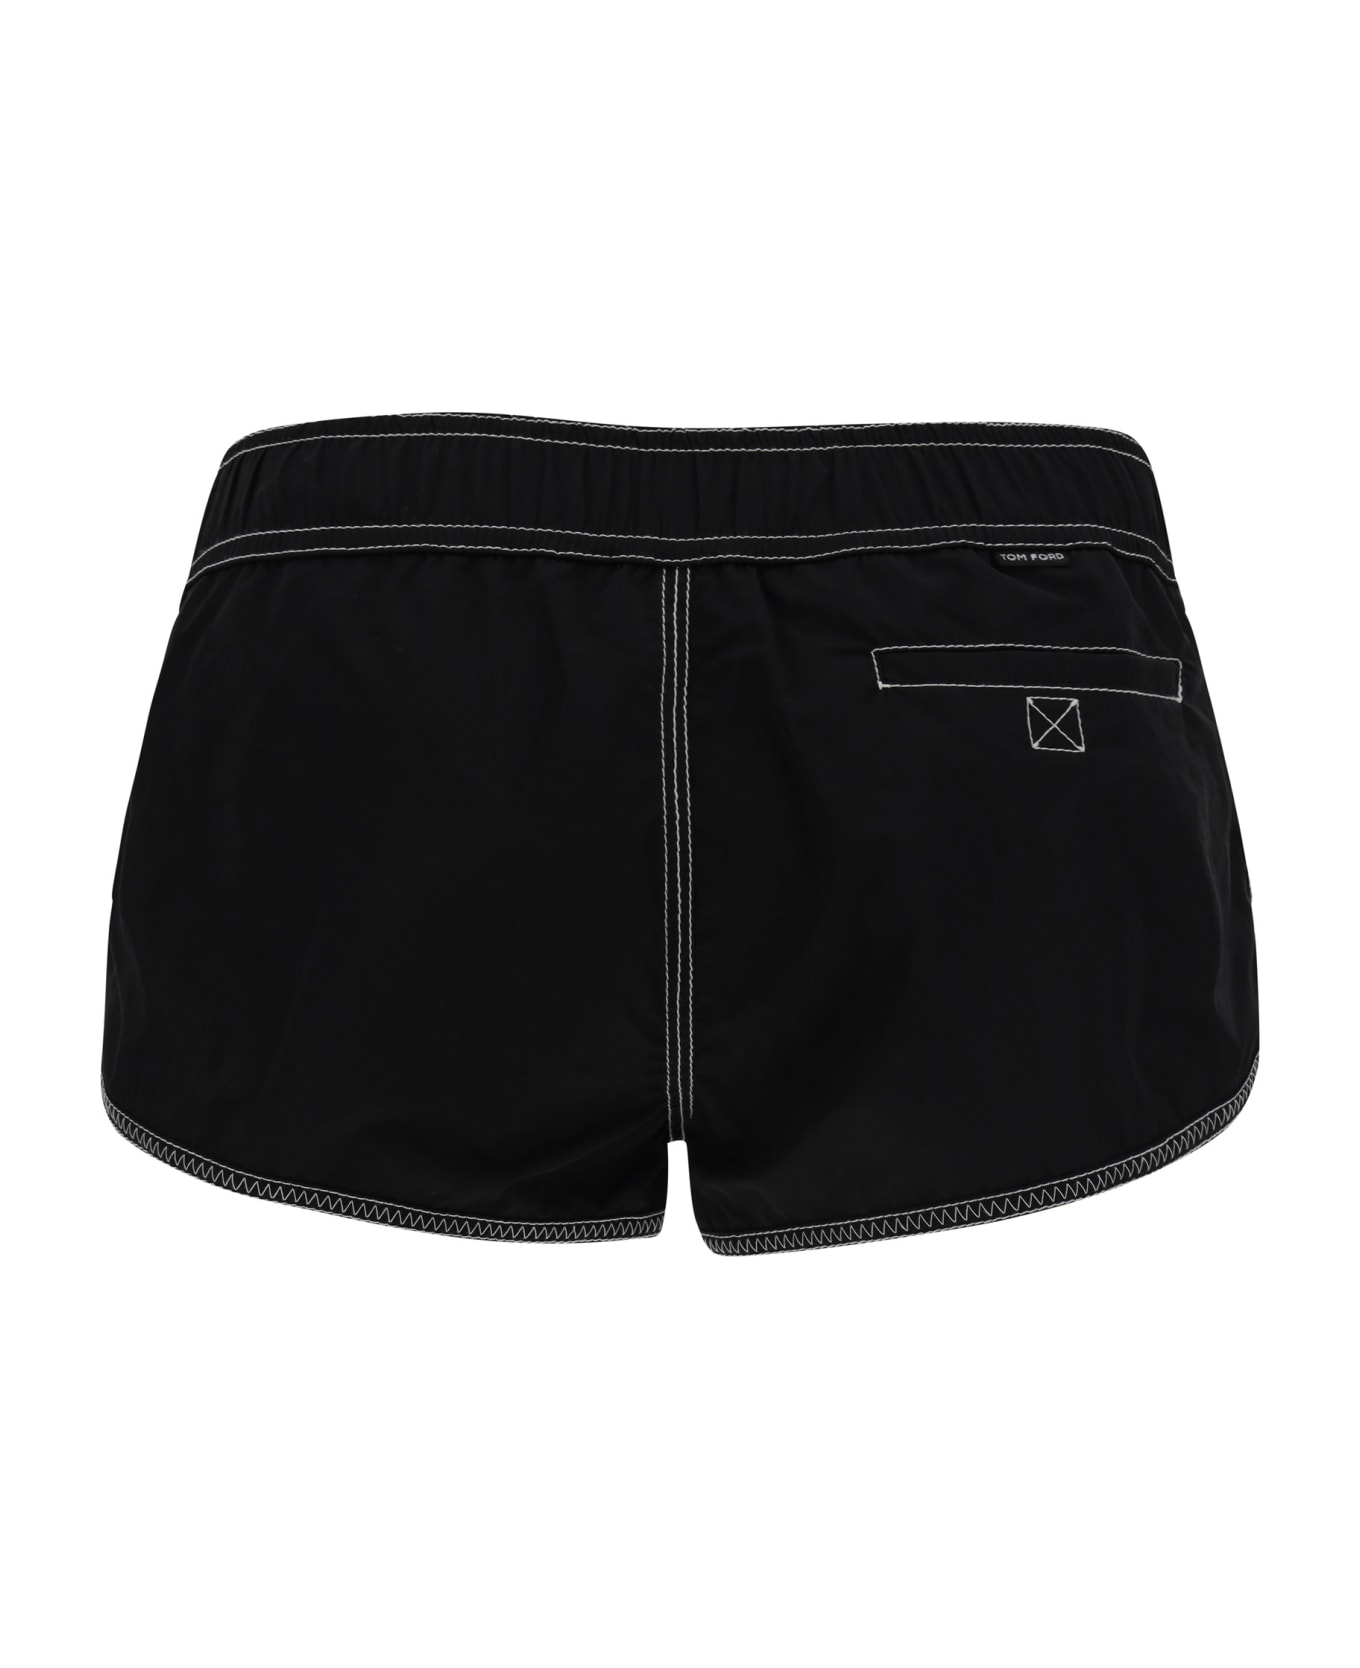 Tom Ford Shorts - Black ショートパンツ